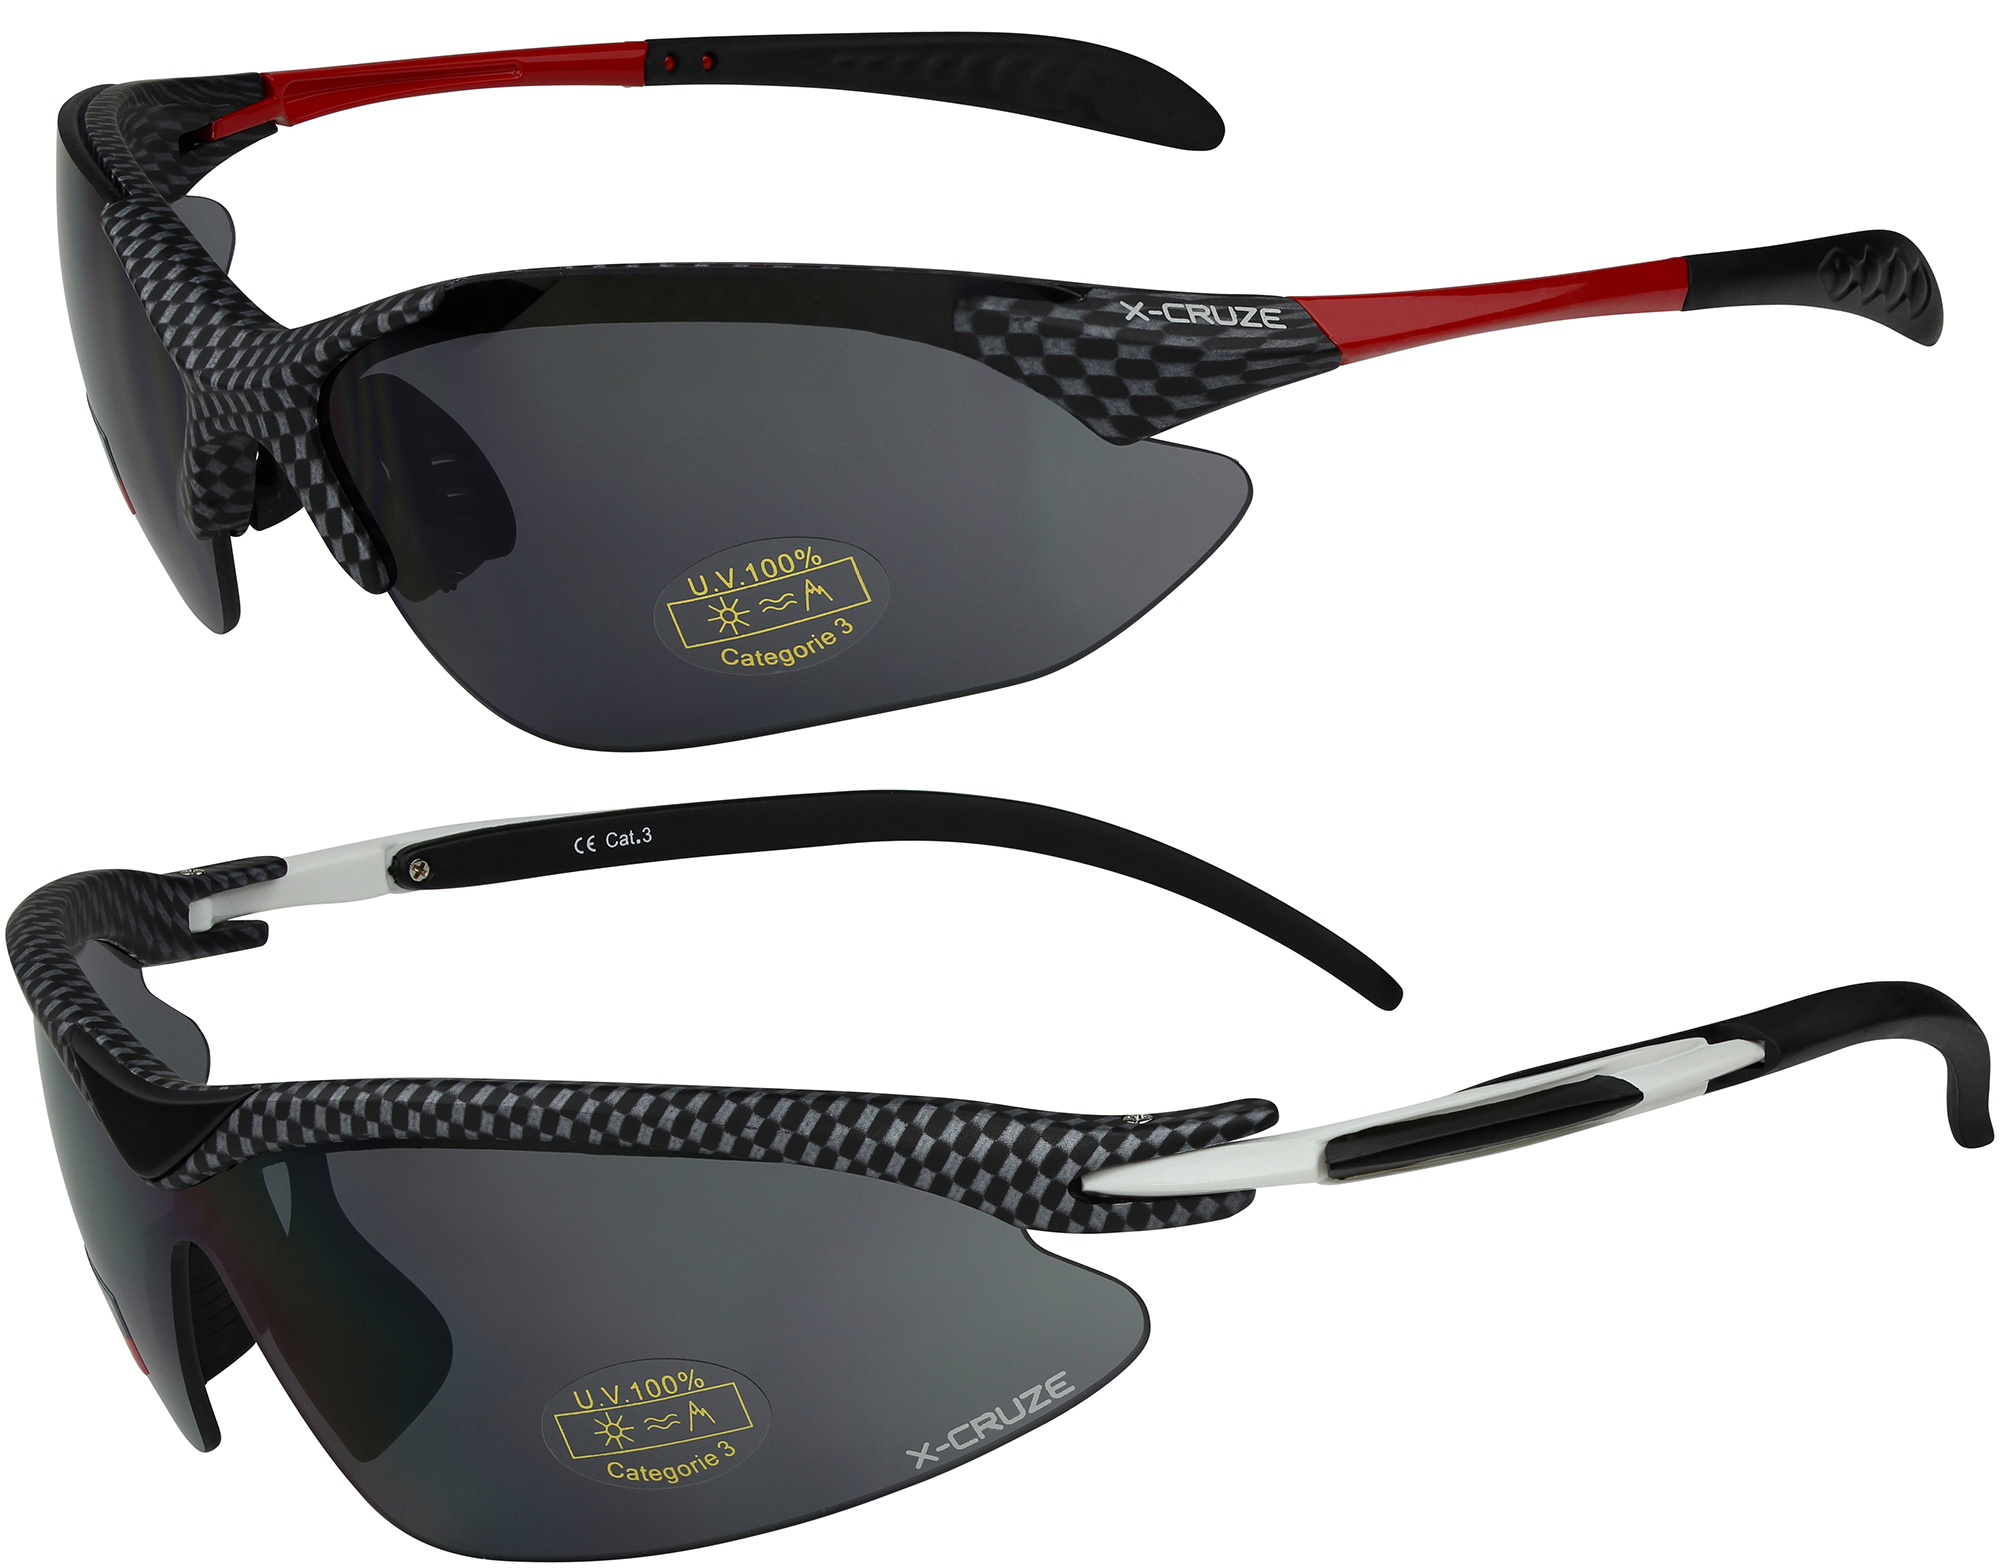 2er Pack X-CRUZE® Fahrradbrille Ski Sonnenbrille Brille Herren Damen schwarz rot 